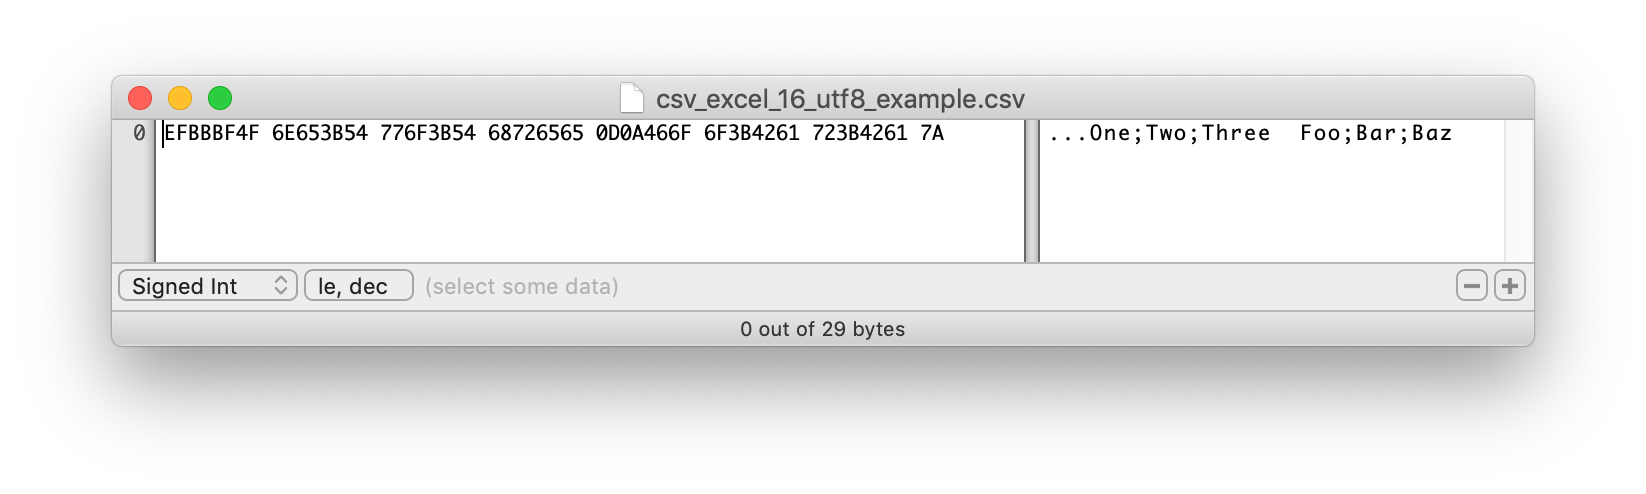 csv_excel_16_utf8_example.csv